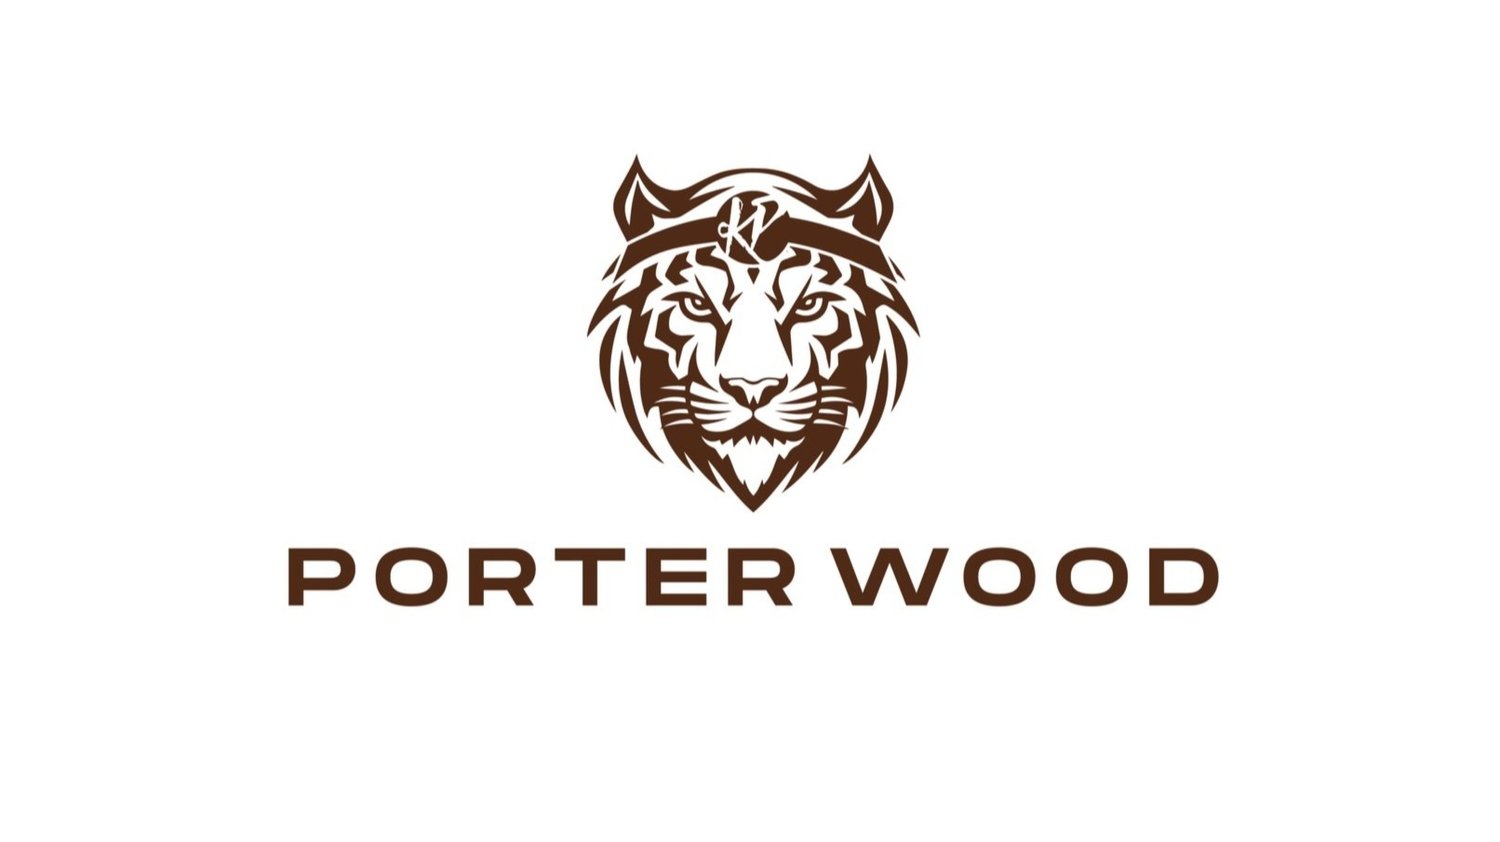 Porter Wood